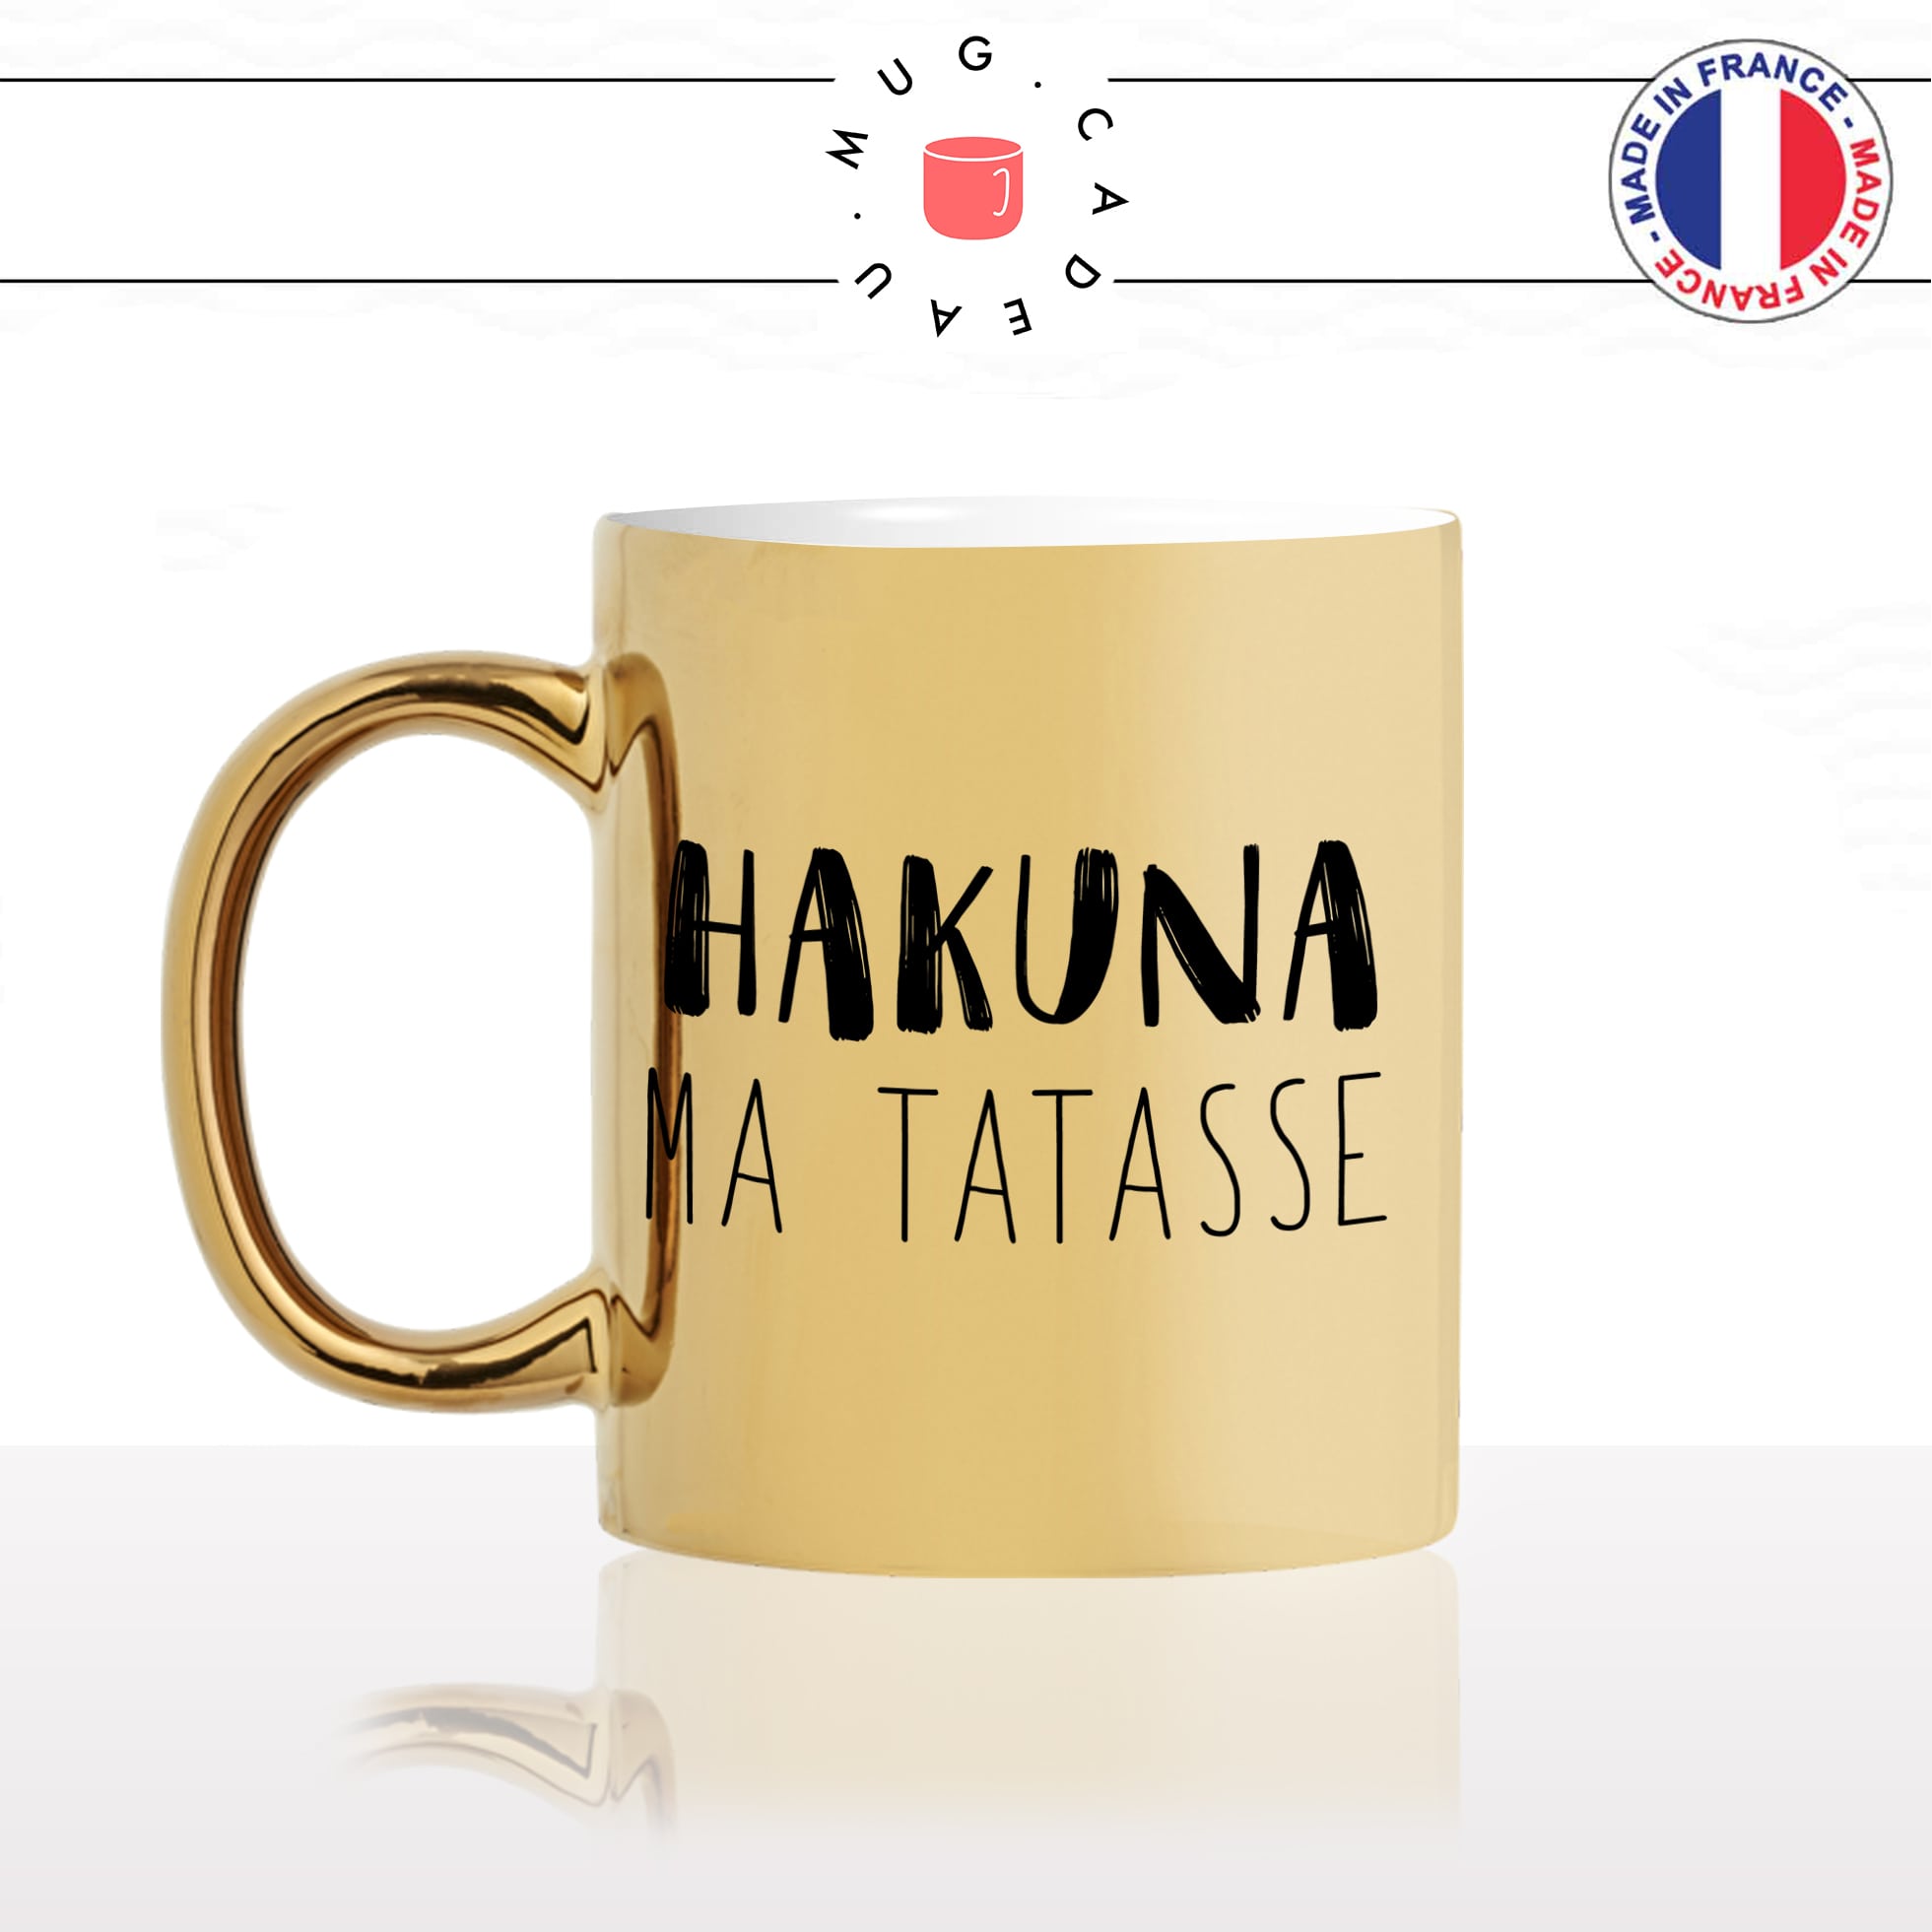 mug-tasse-doré-or-gold-hakuna-ma-tatasse-motto-original-humour-fun-idée-cadeau-personnalisé-café-thé-min